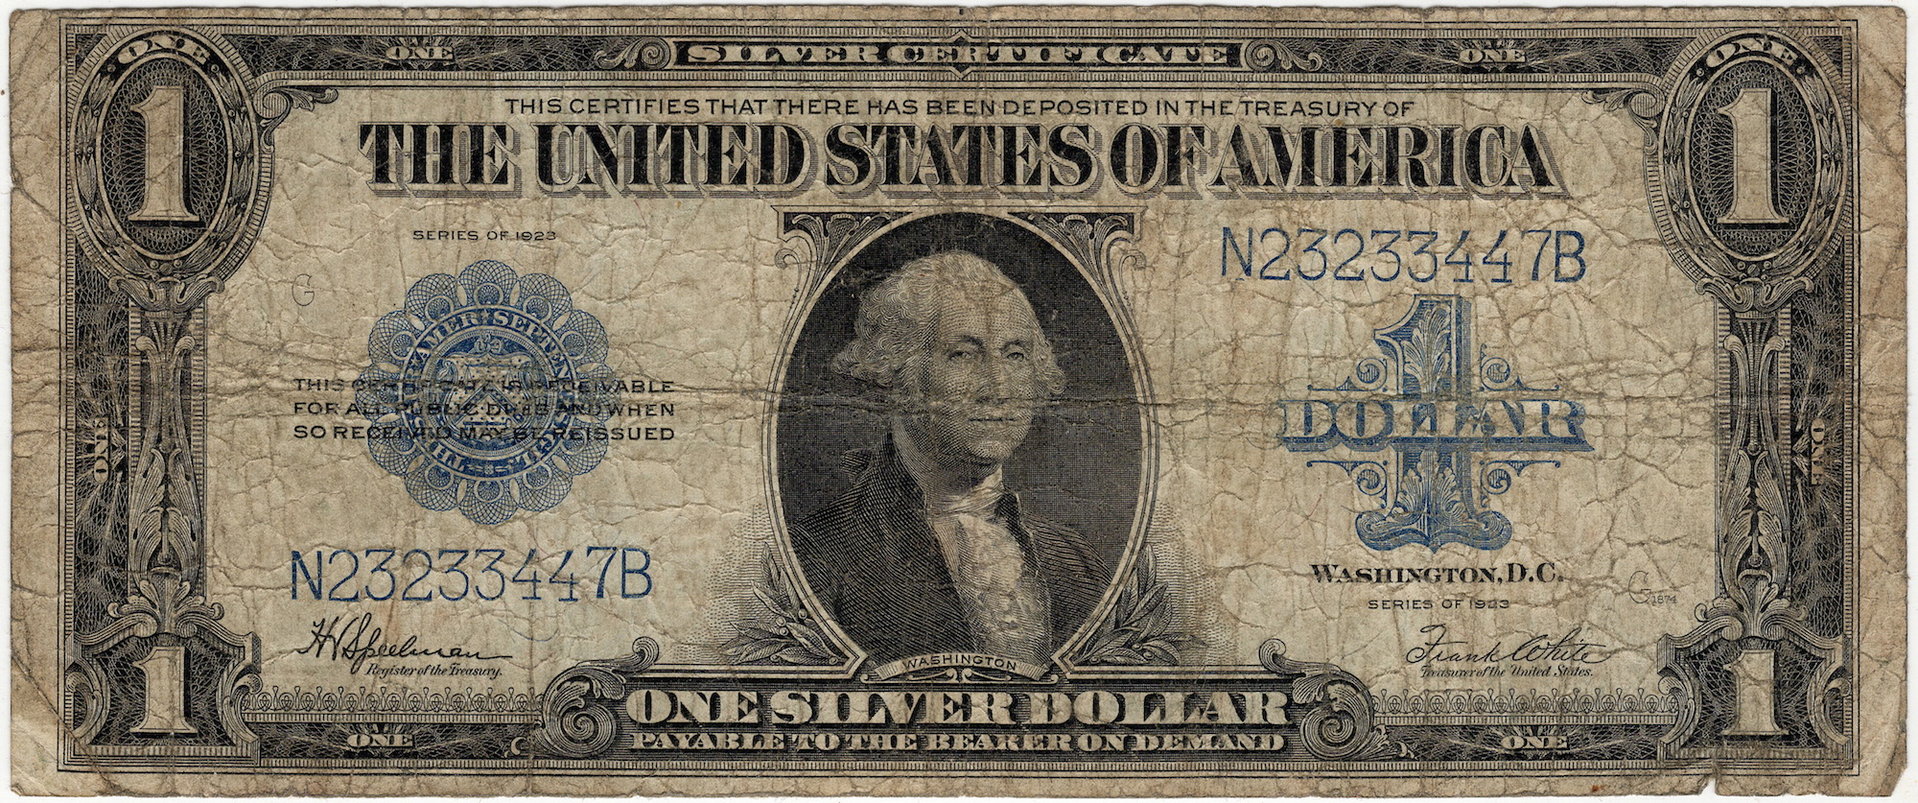 1923 1 Dollar Large Size Silver Certificate N23233447B - Obverse.JPG